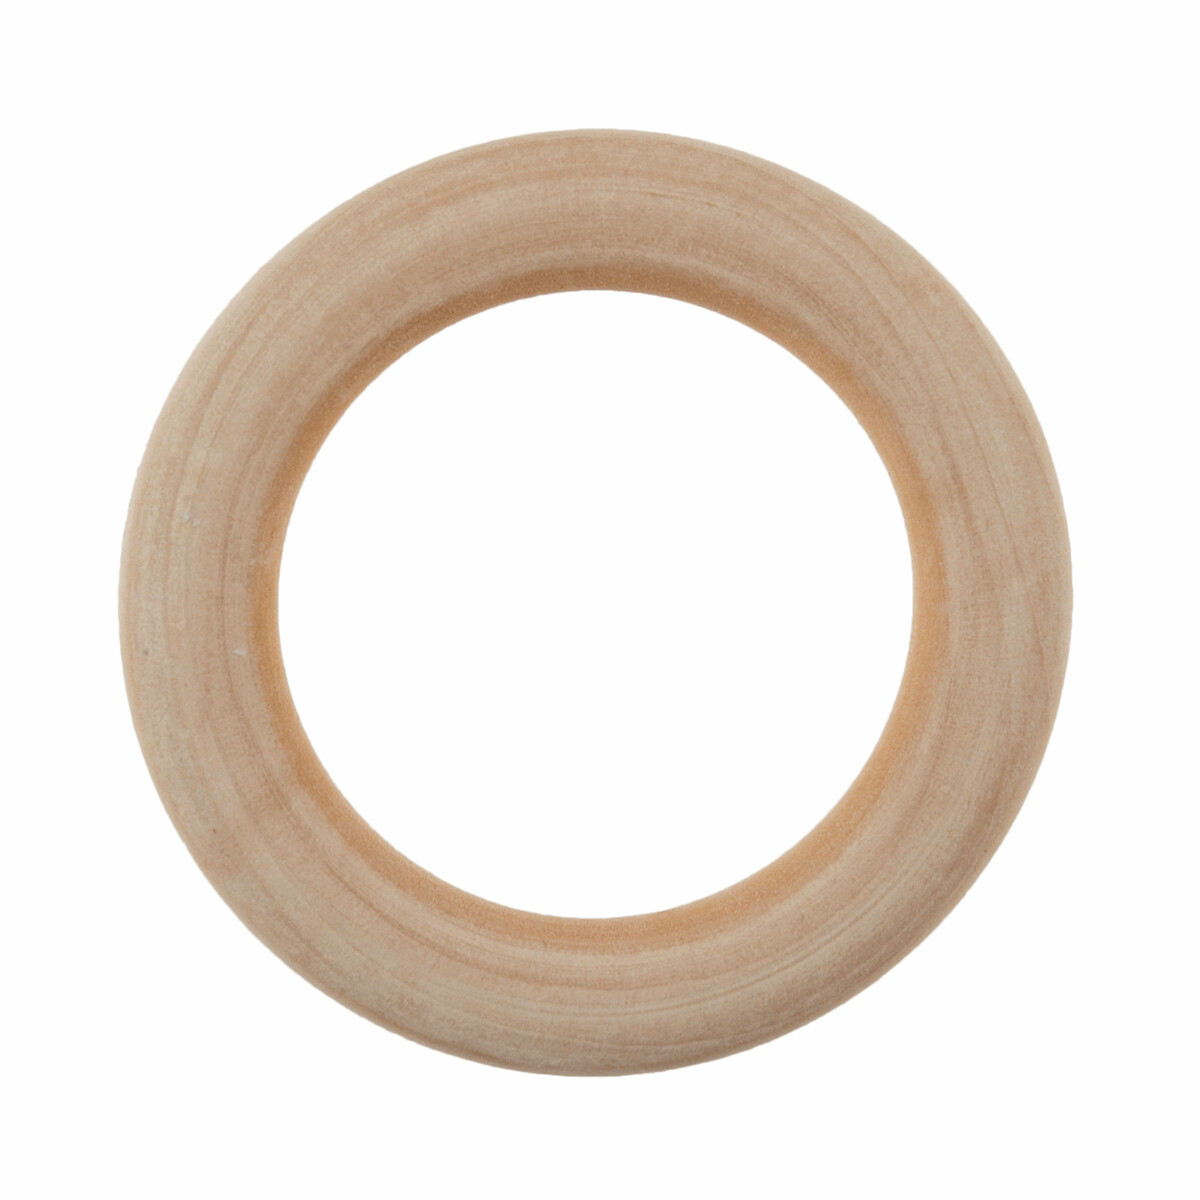 Birch Wood Craft Ring: 7cm diameter.